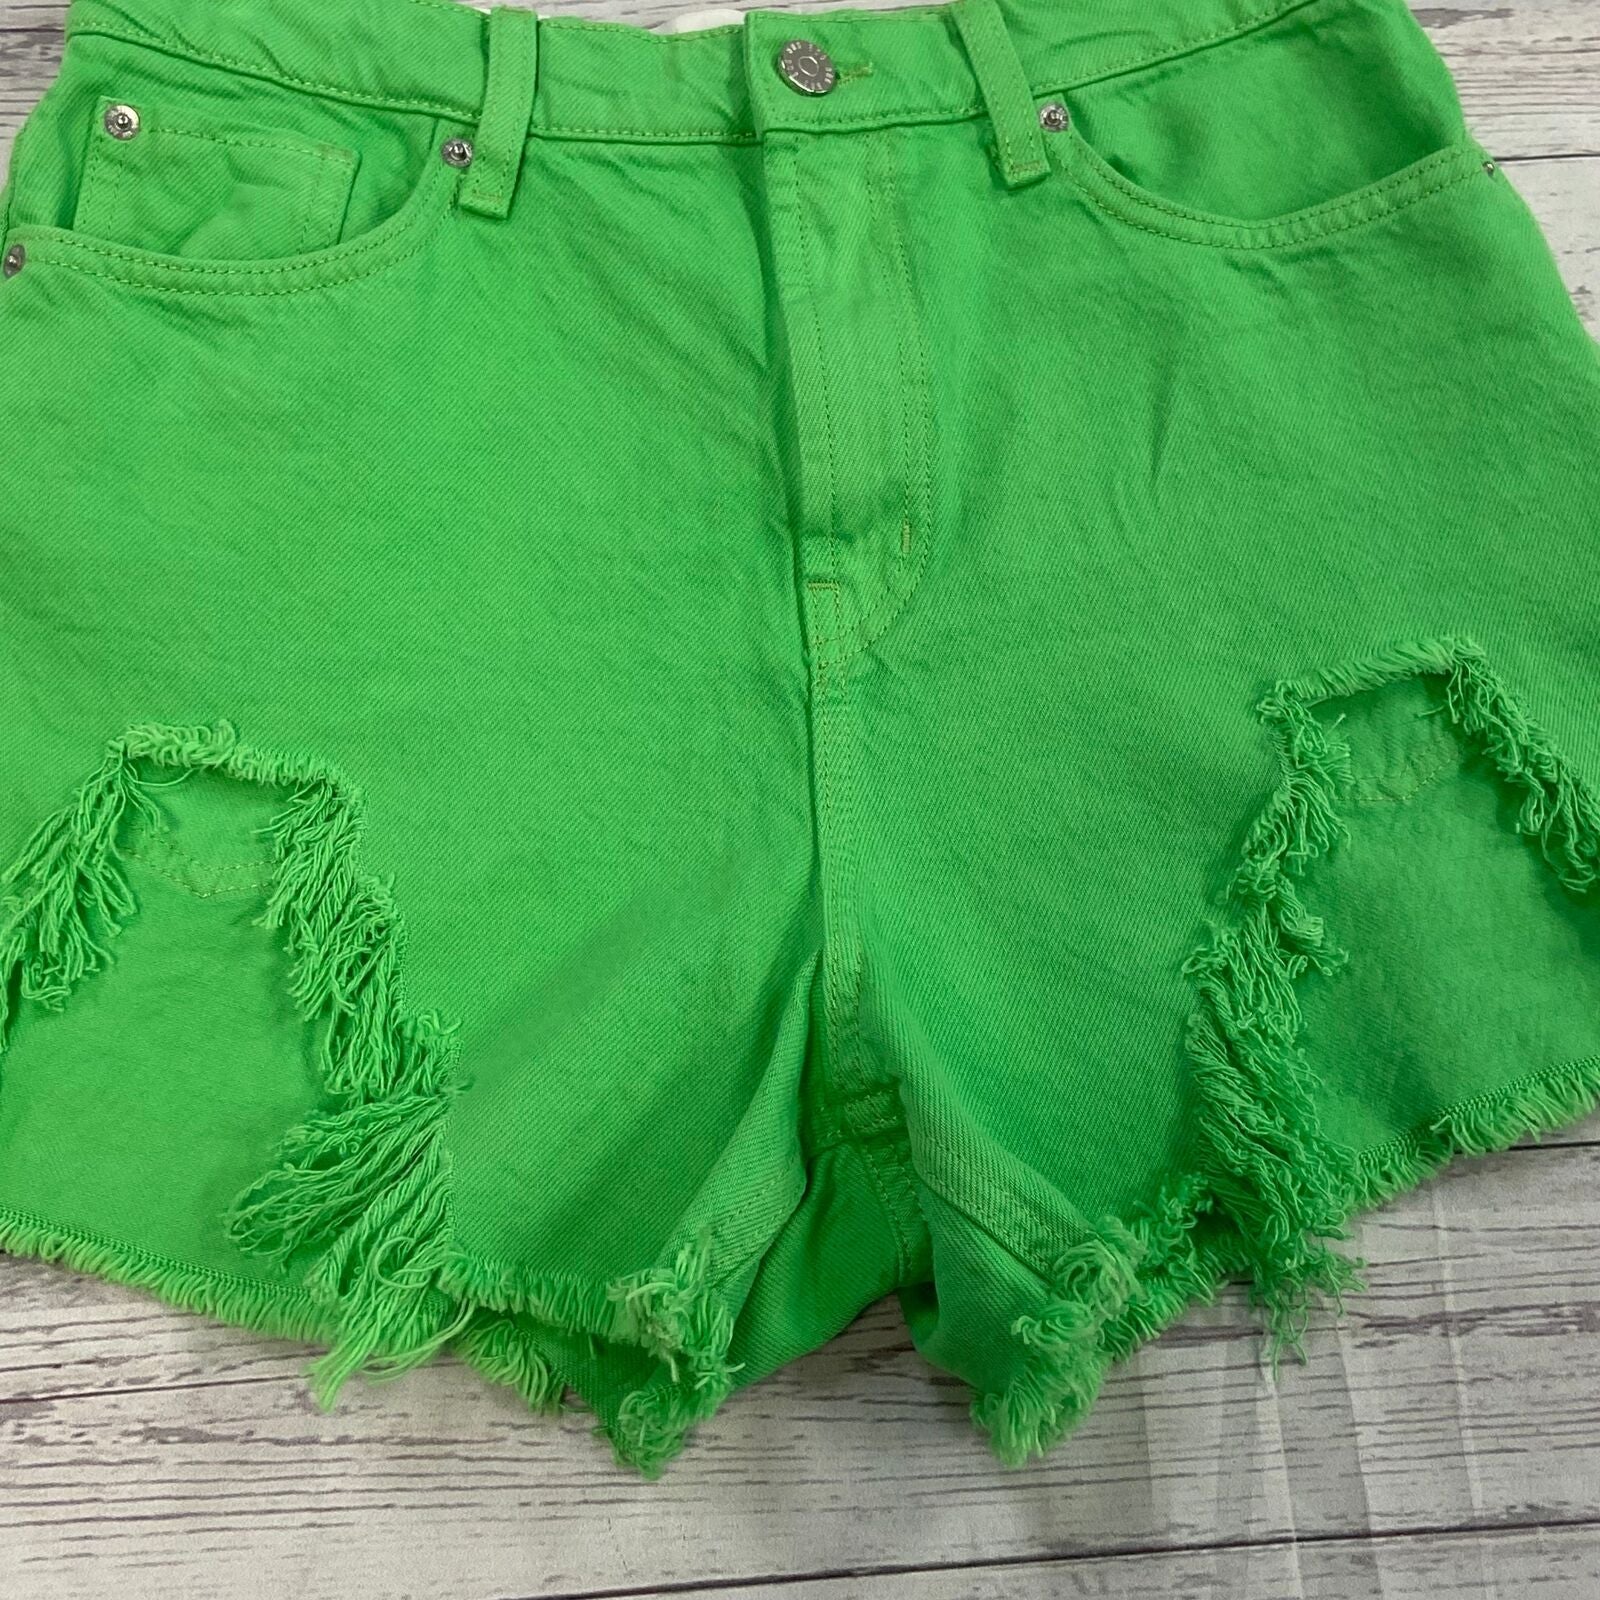 BDG Neon Shorts Distressed exchange beyond Size Denim - Cut-Off A-Line Women Green Jean